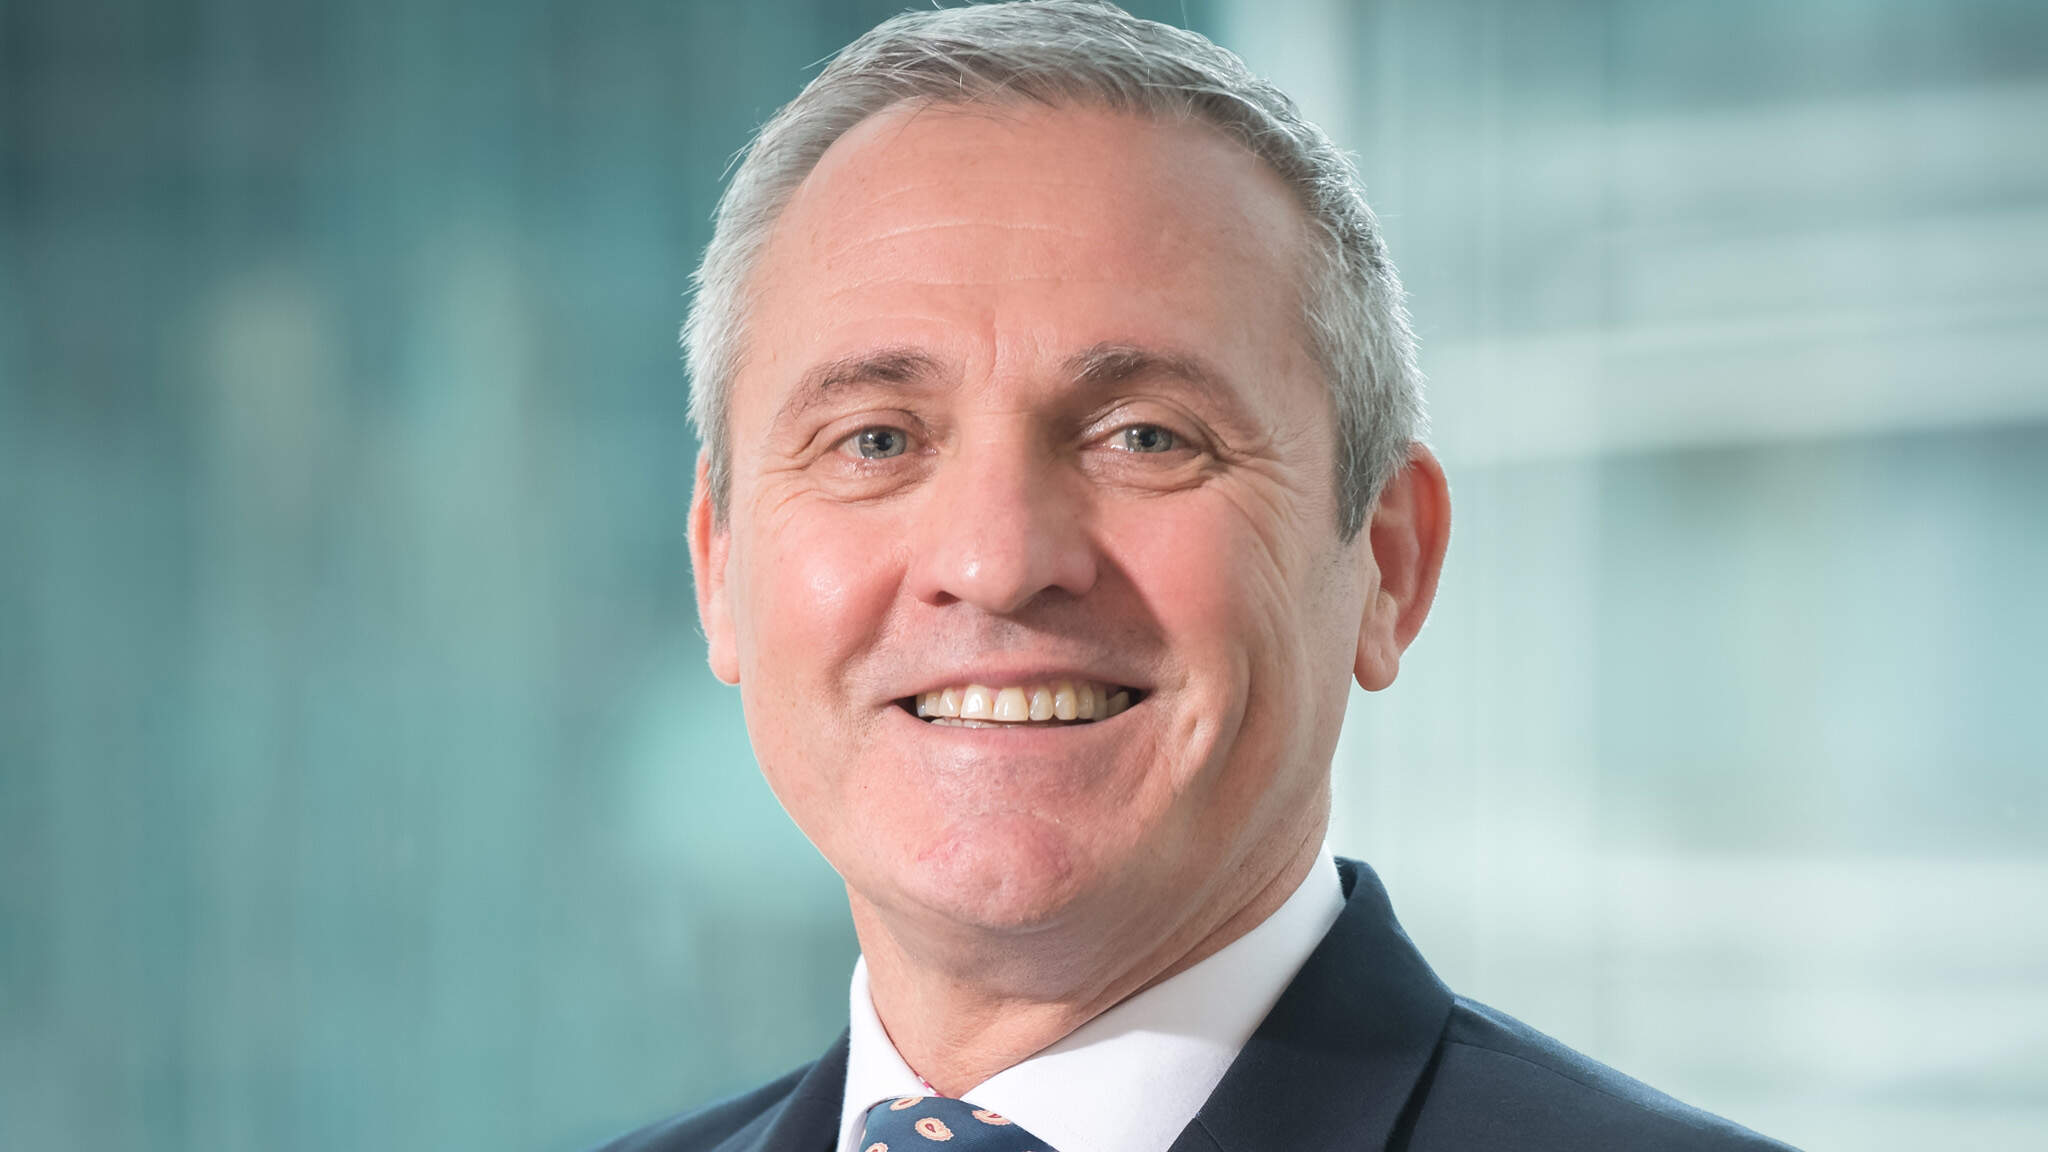 Yves Larquemin assumed his new role as Managing Director Air & Sea Logistics Far East North